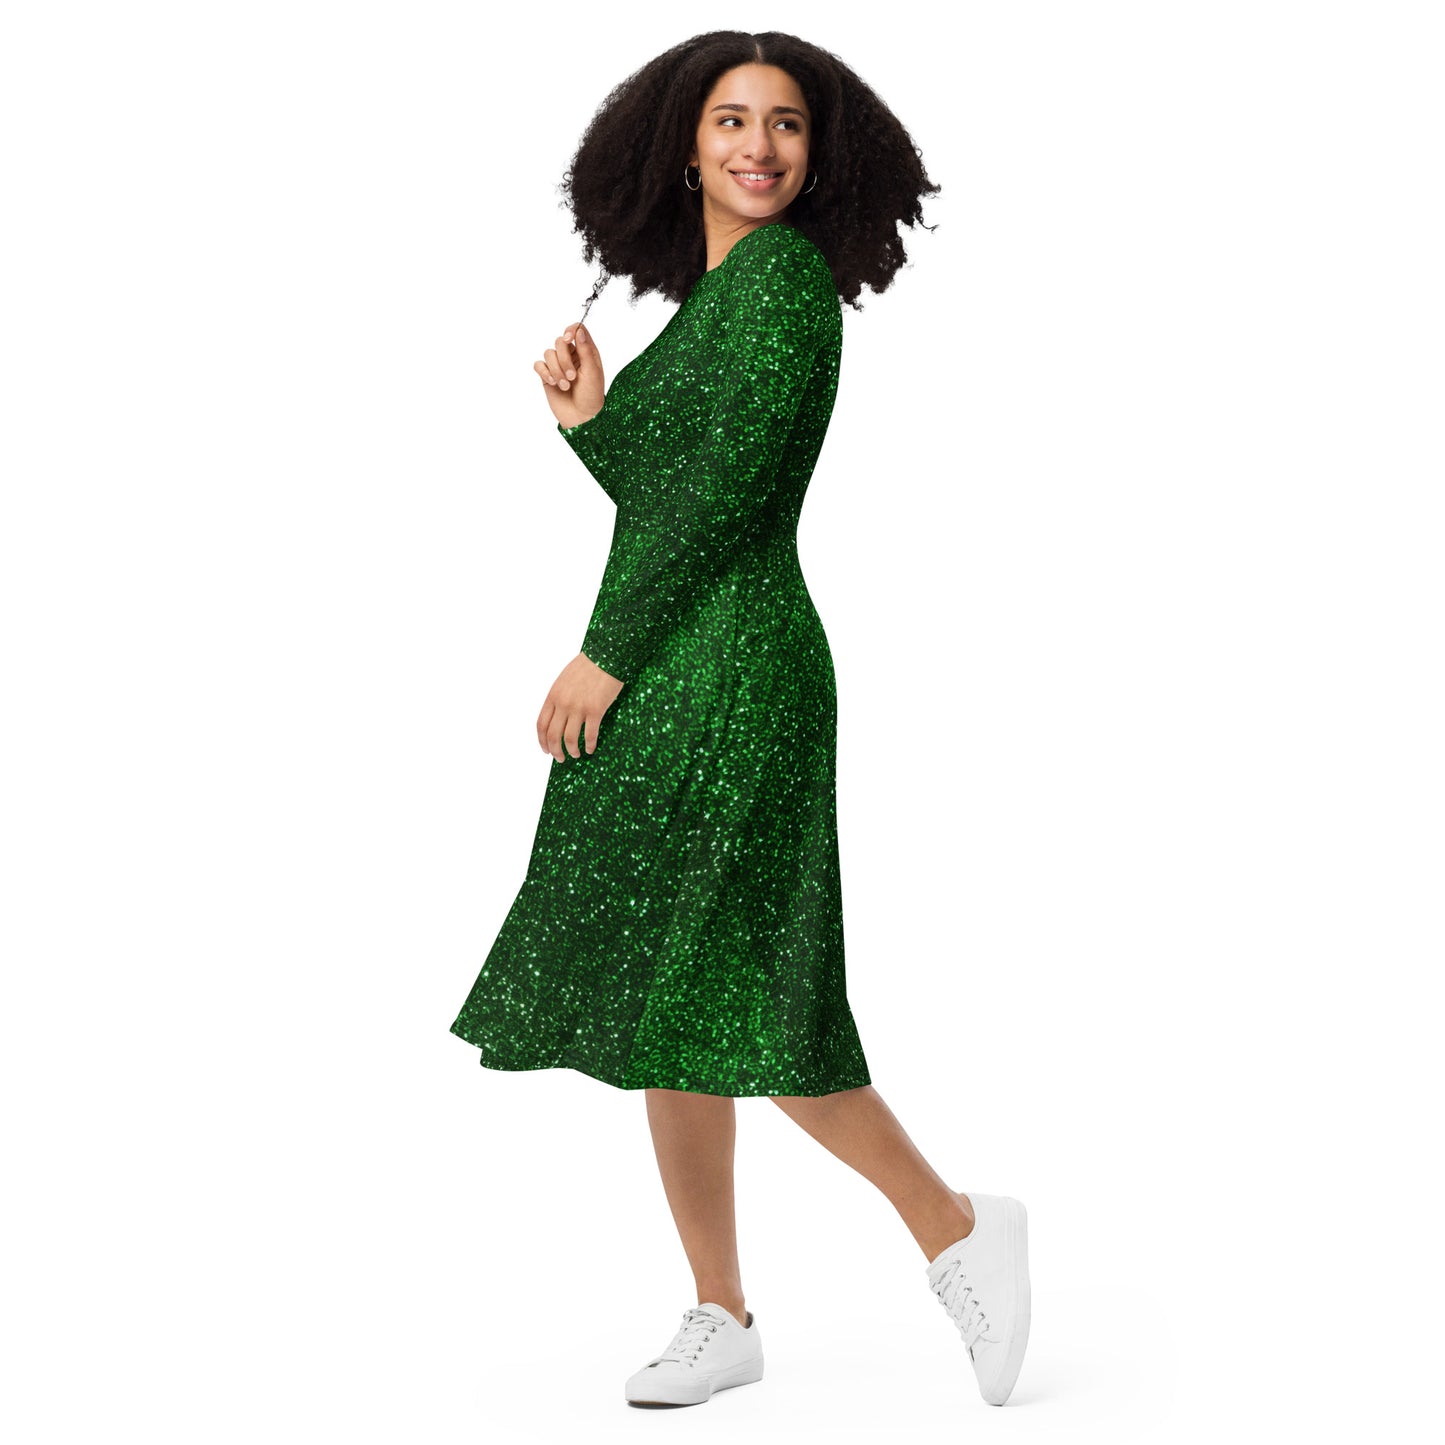 Enchanting Ivy: Green Long Sleeve Midi Dress for Effortless Style